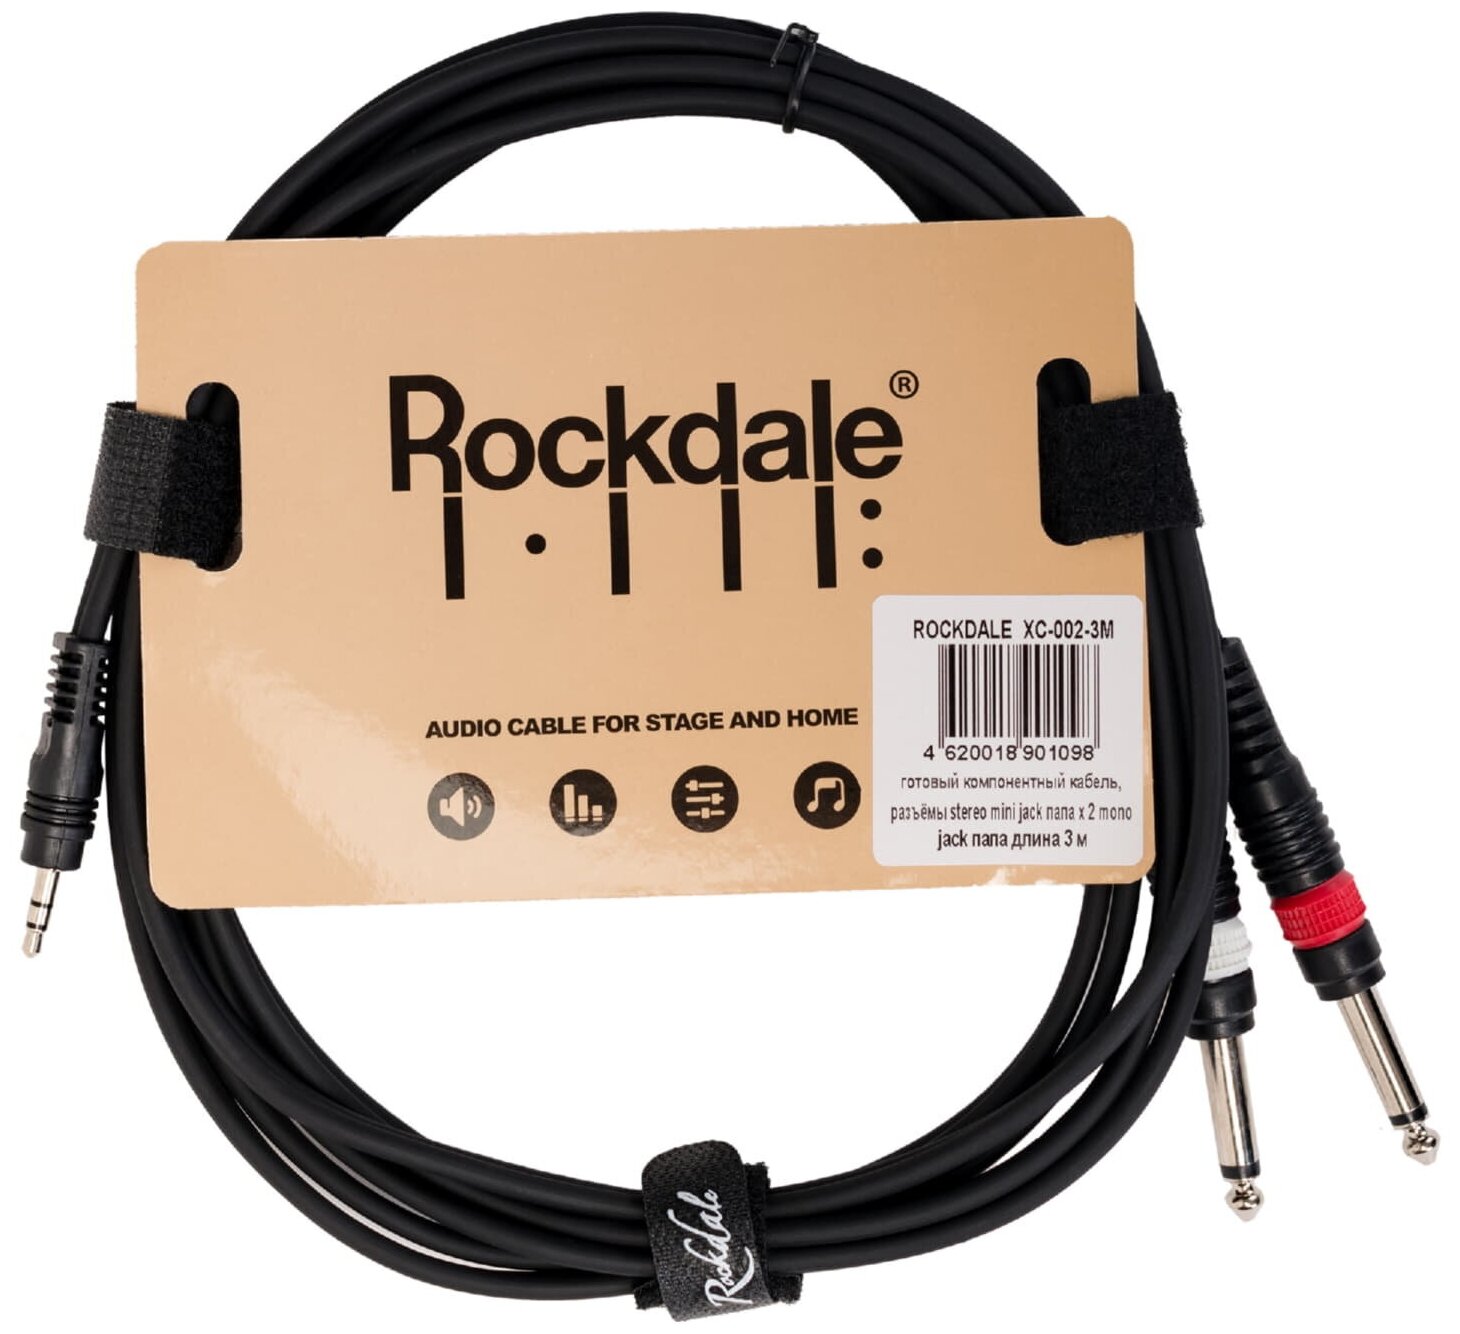 ROCKDALE XC-002-3M Готовый компонентный кабель разъёмы stereo mini jack папа x 2 mono jack папа длина 3 м